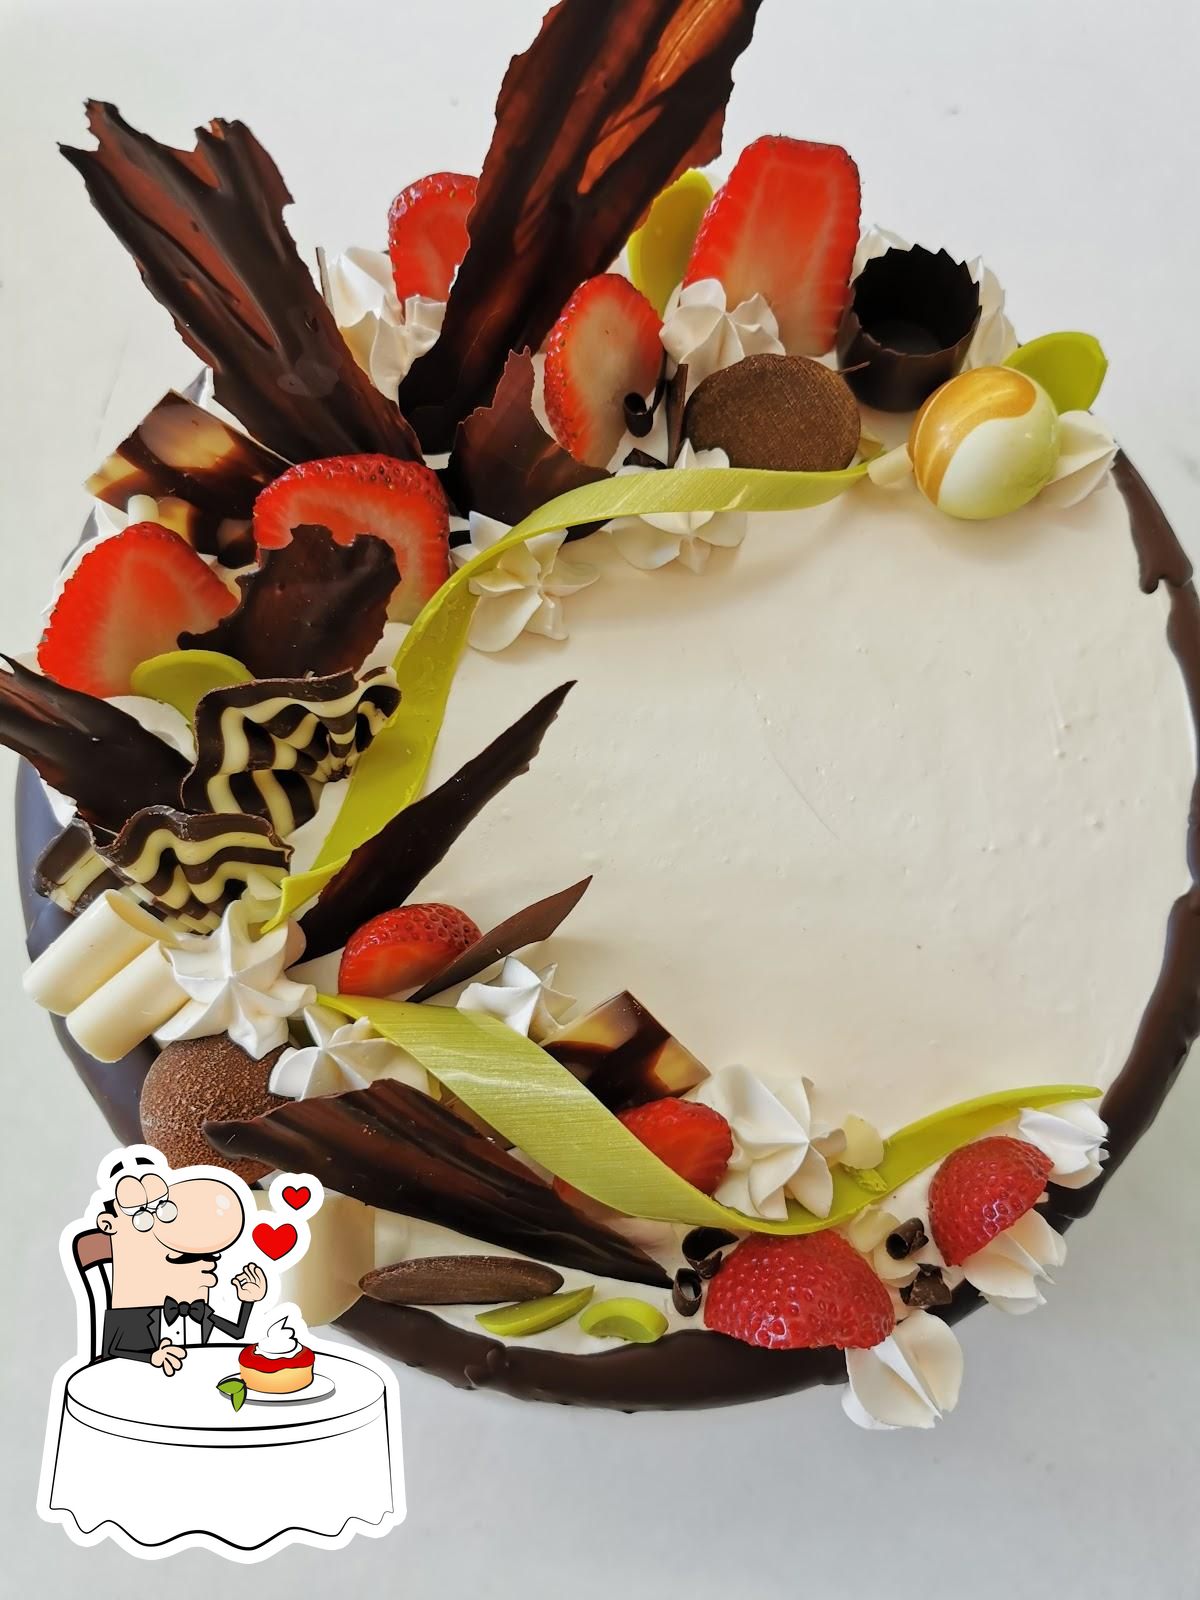 Cake-Links Nagpur 🍰🍣🍩 (@cakelinks.in) • Instagram photos and videos